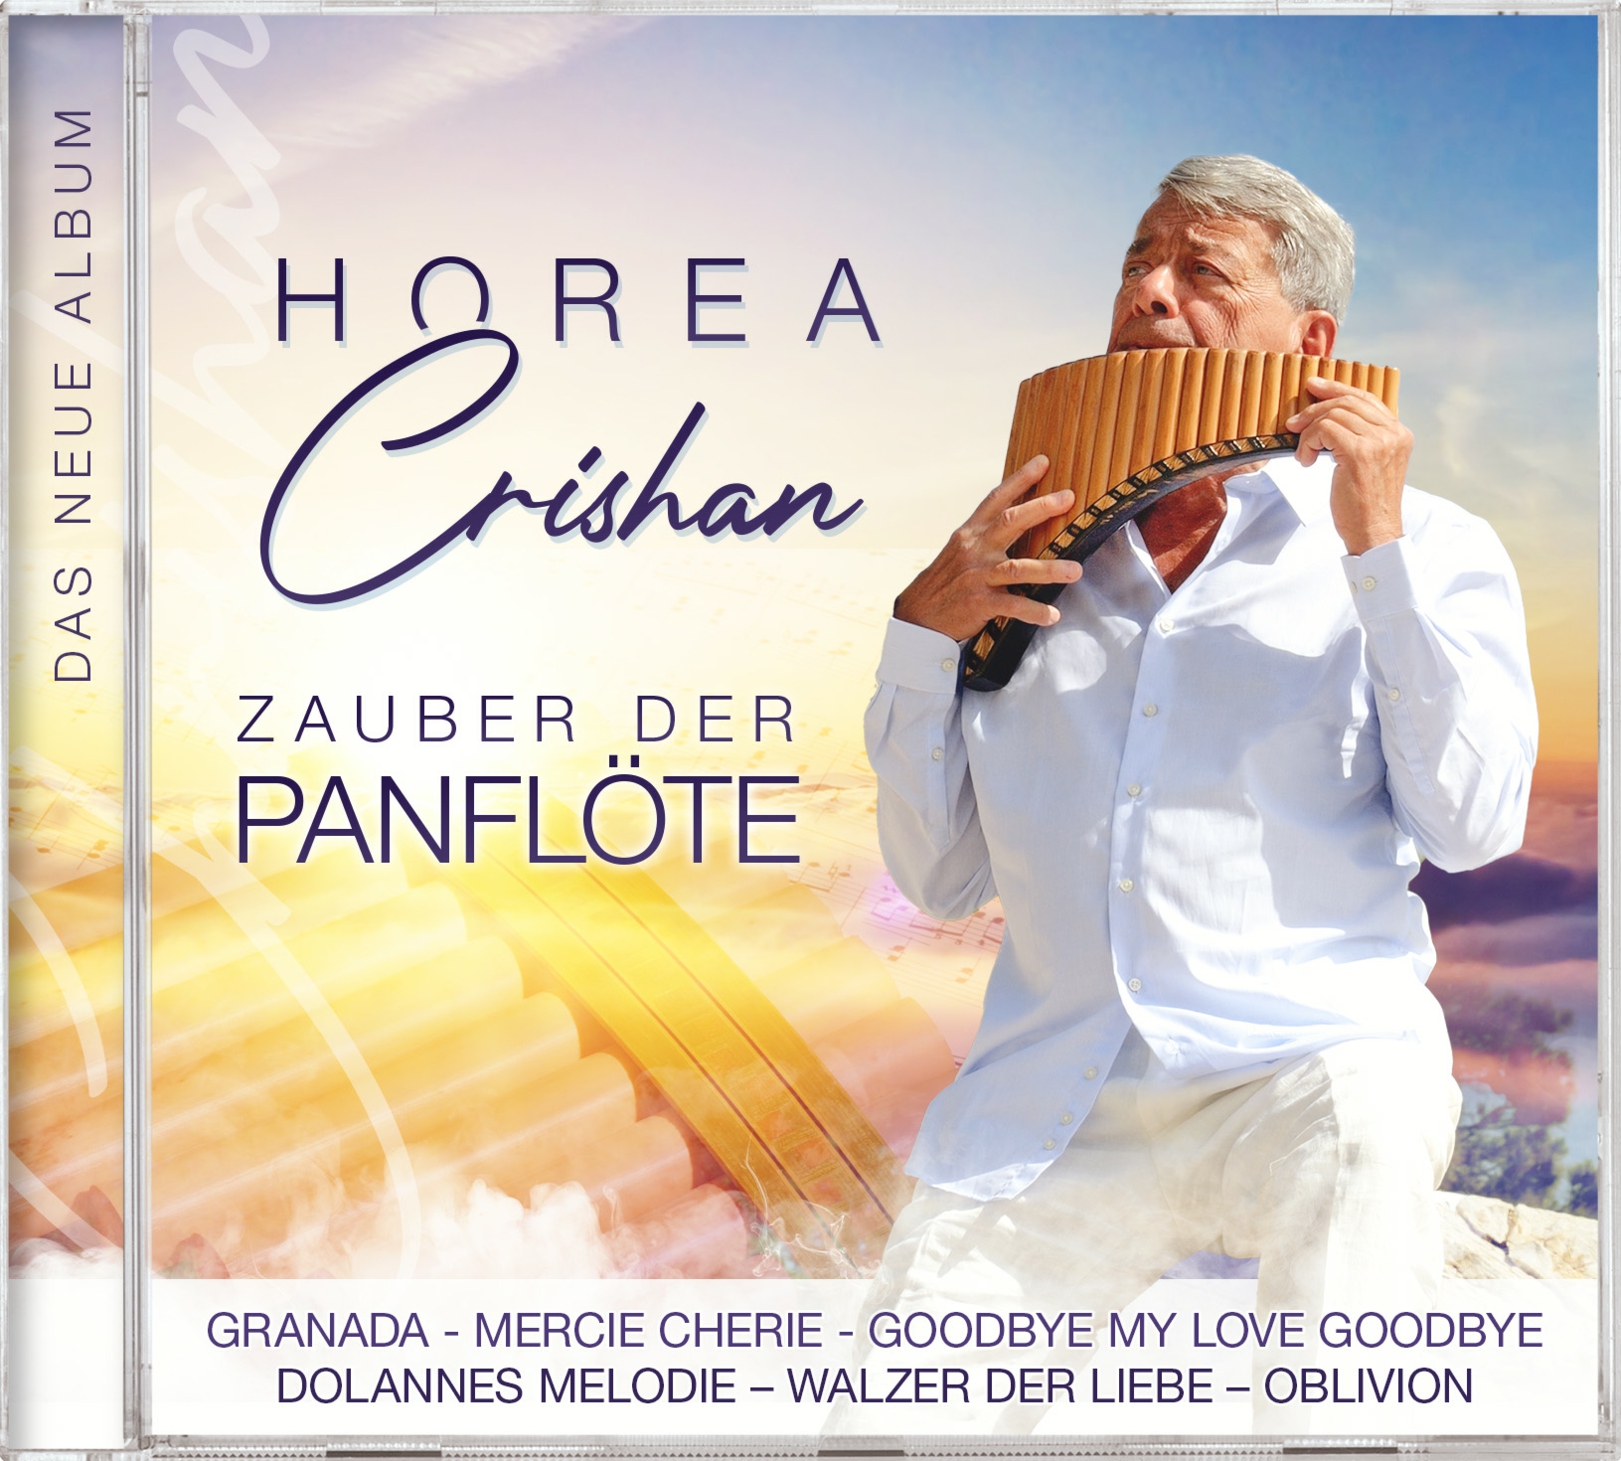 HOREA CRISHAN * Zauber der Panflöte (CD)